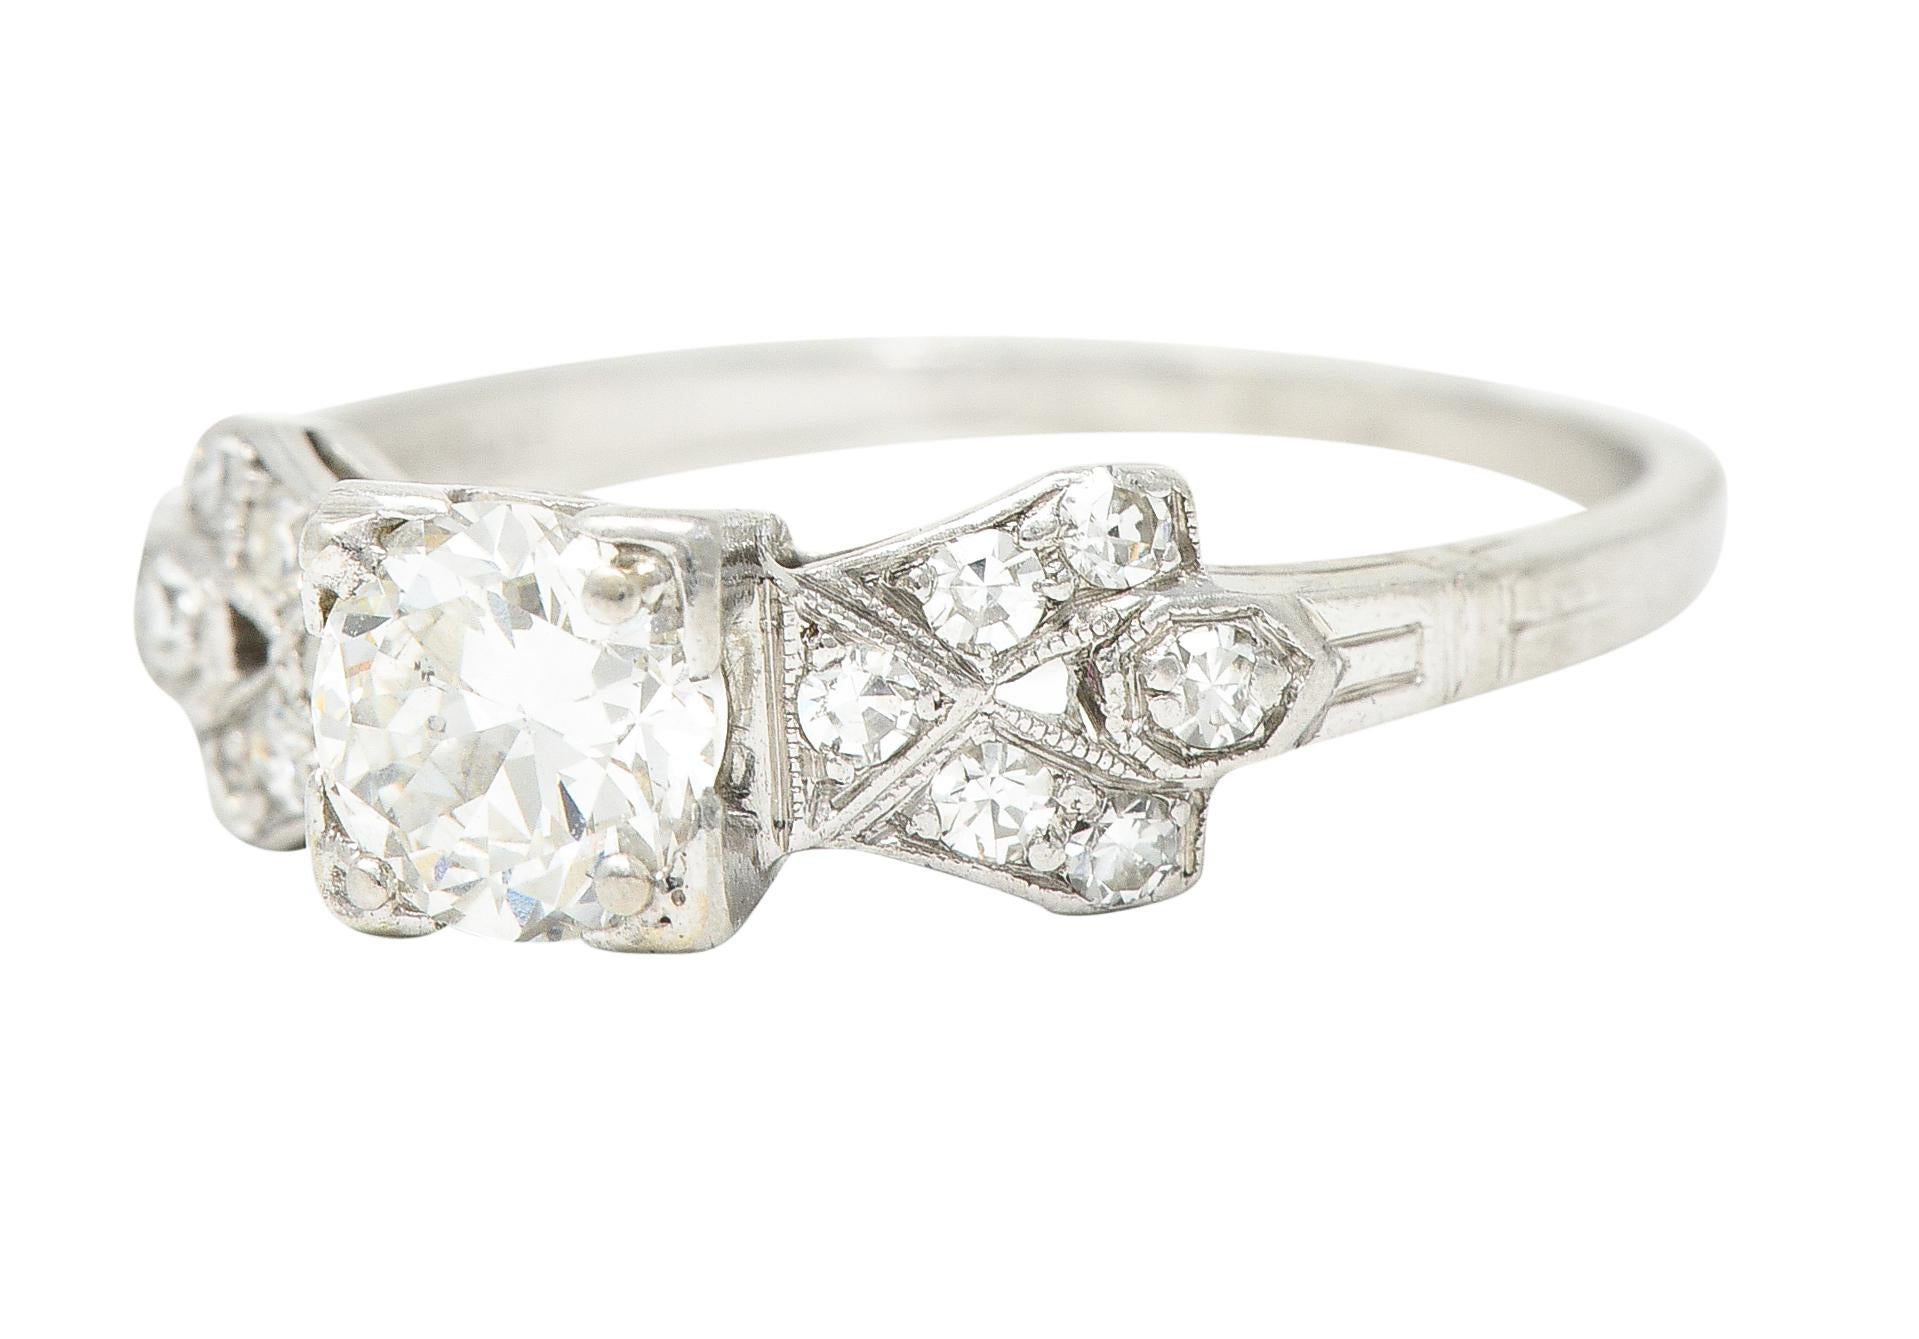 Late Art Deco 0.64 Carat Transitional Cut Diamond Platinum Engagement Ring For Sale 1